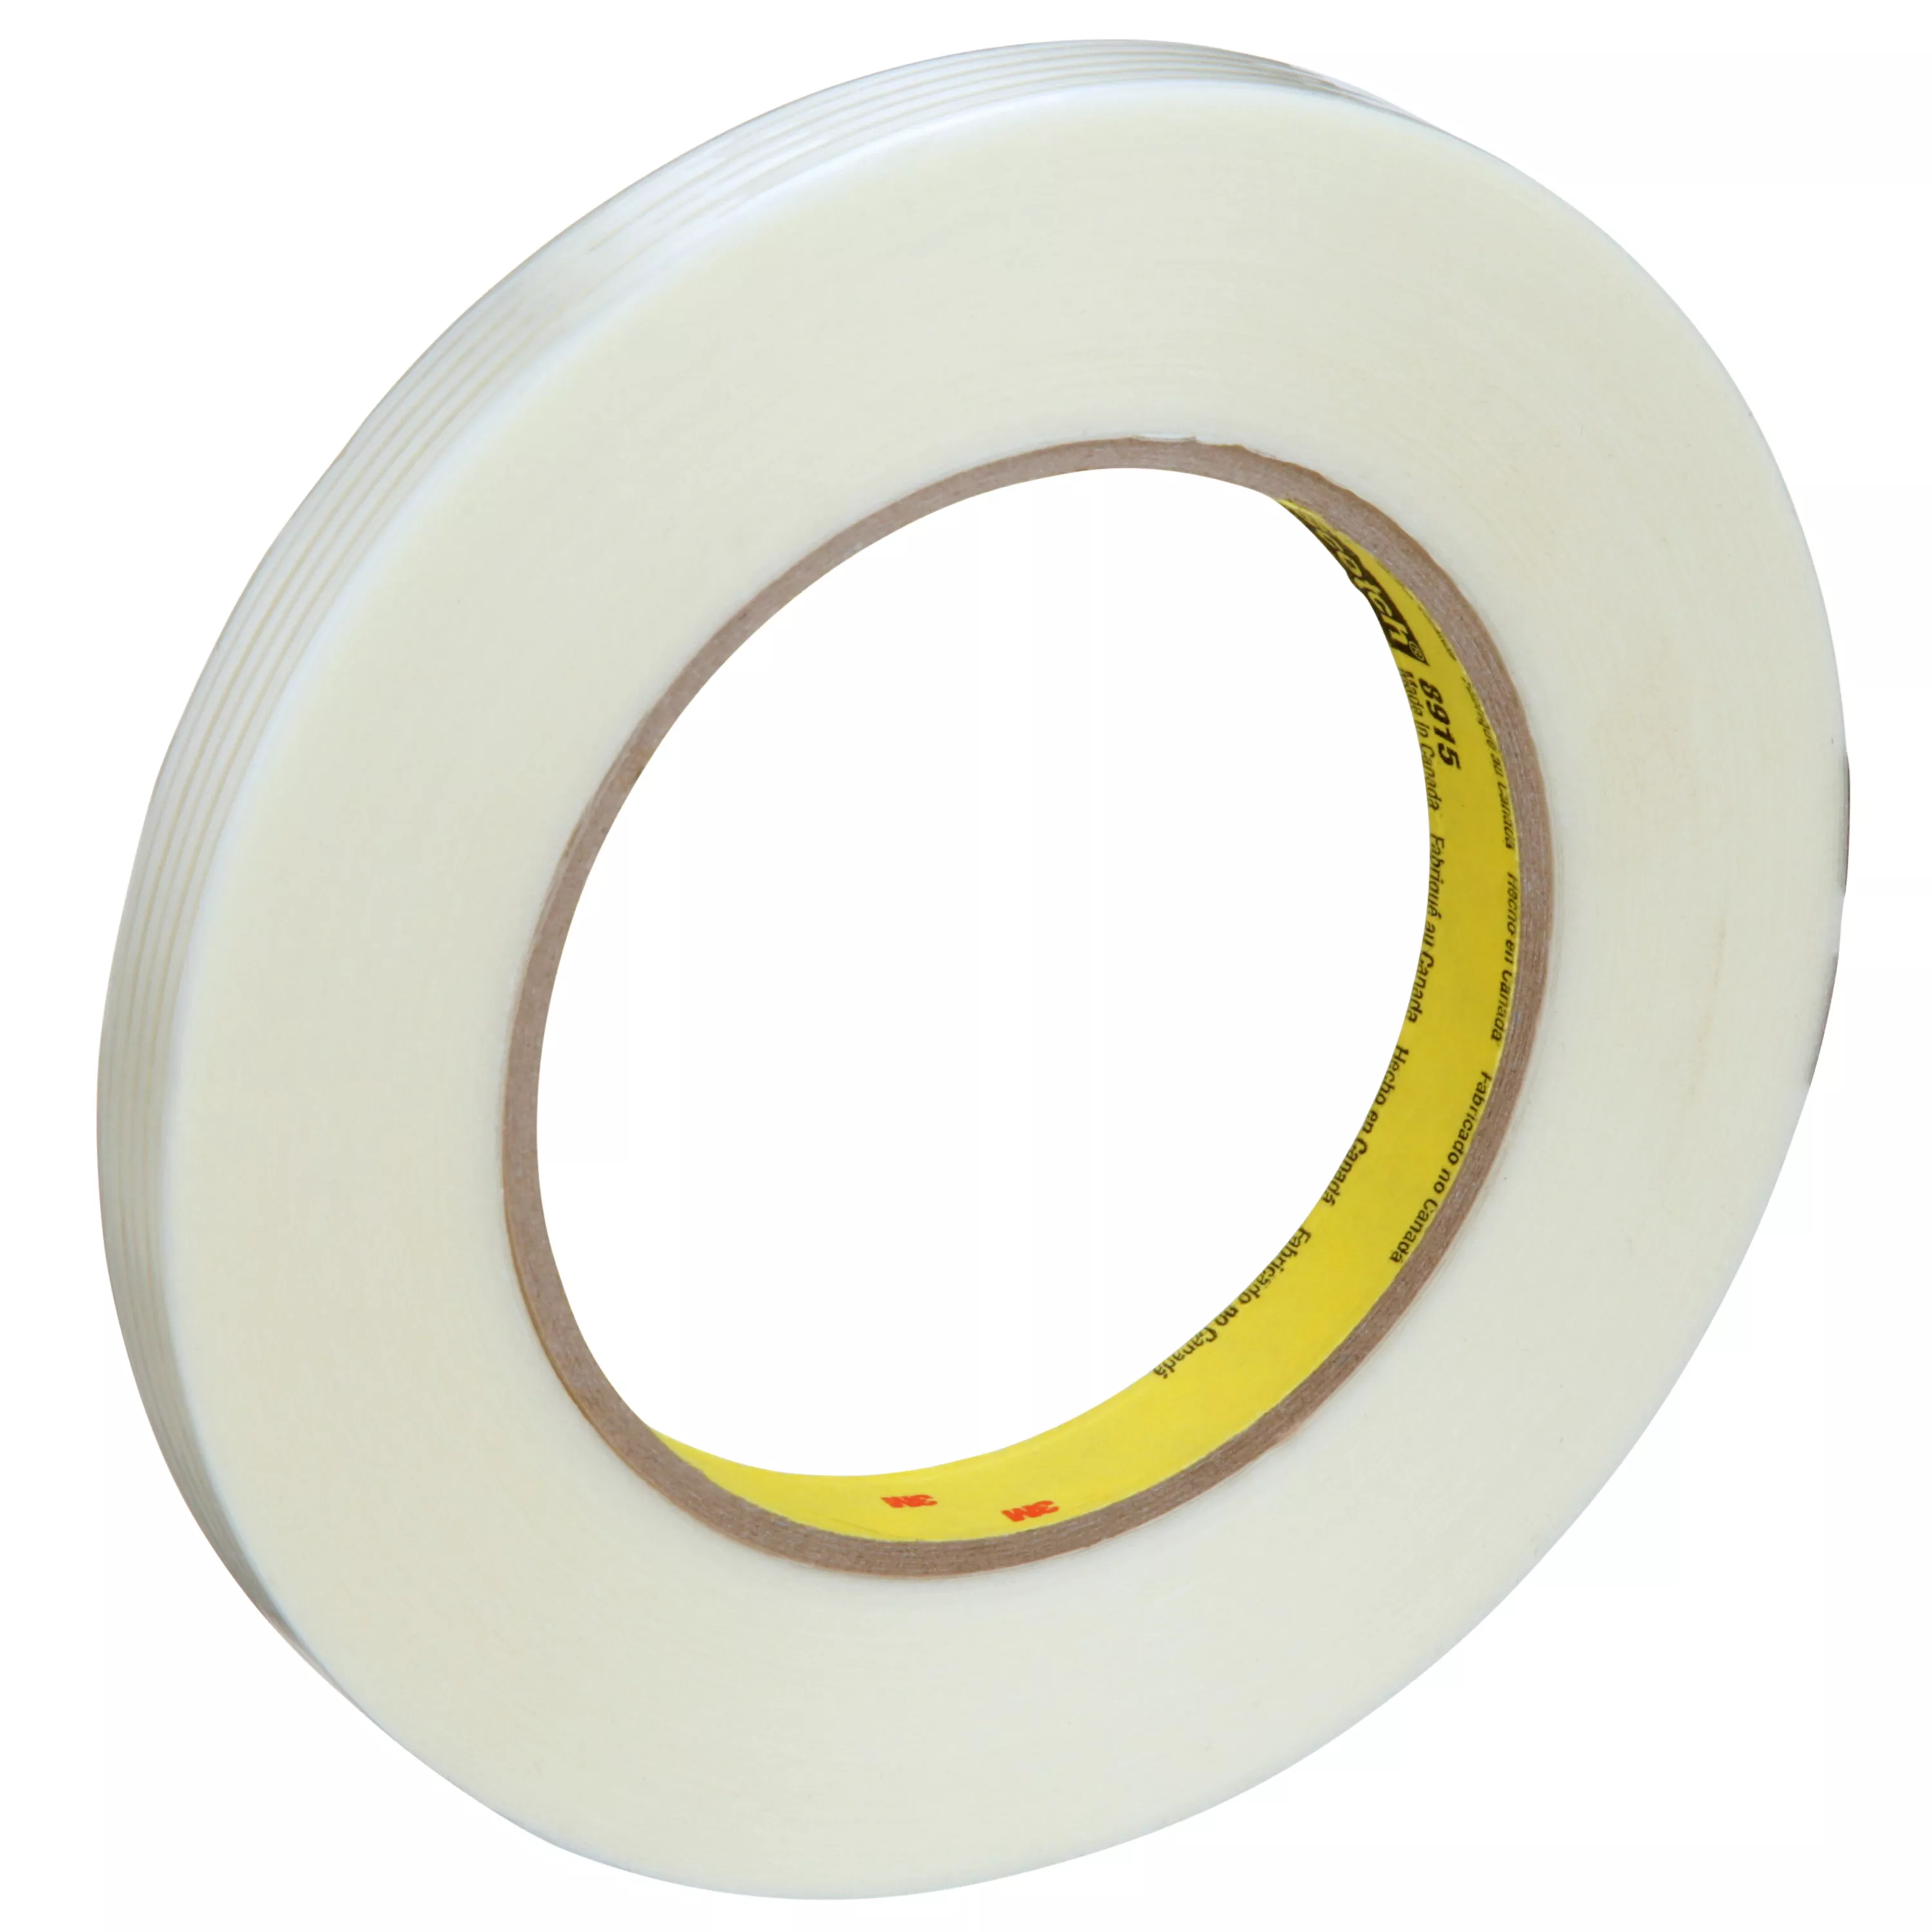 Scotch® Filament Tape Clean Removal 8915, 12 mm x 55 m, 6 mil, 72
Roll/Case